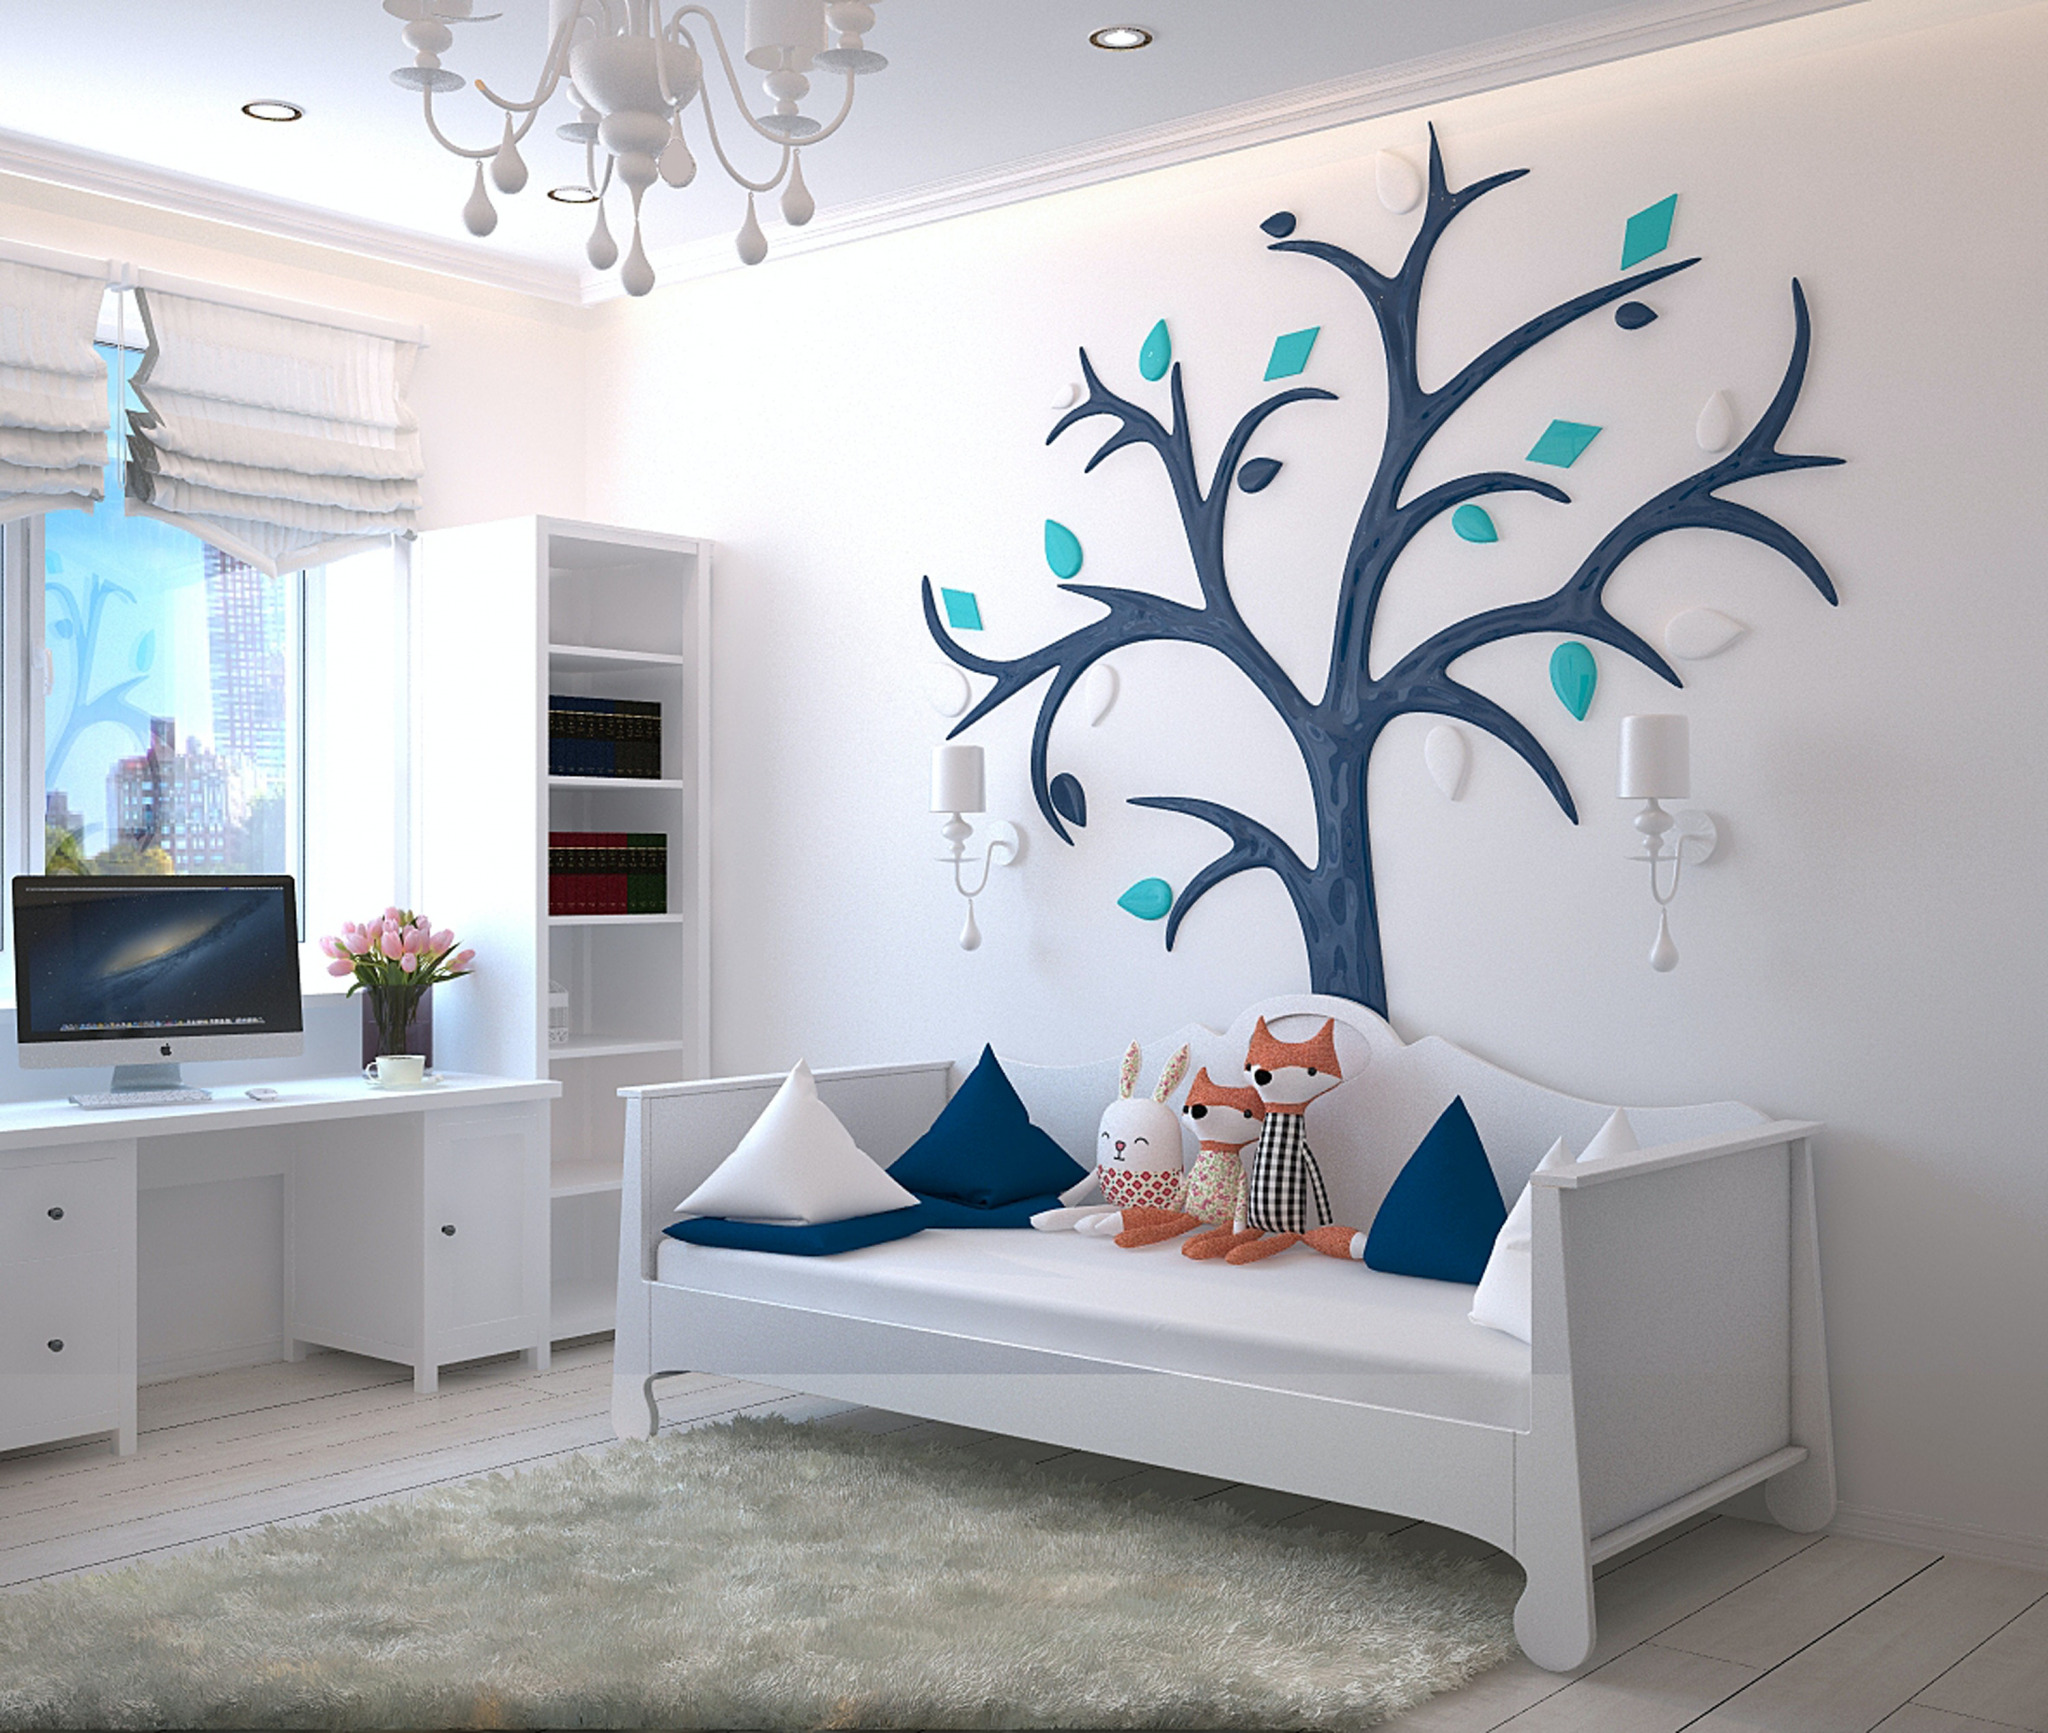 Child bedroom decor ideas